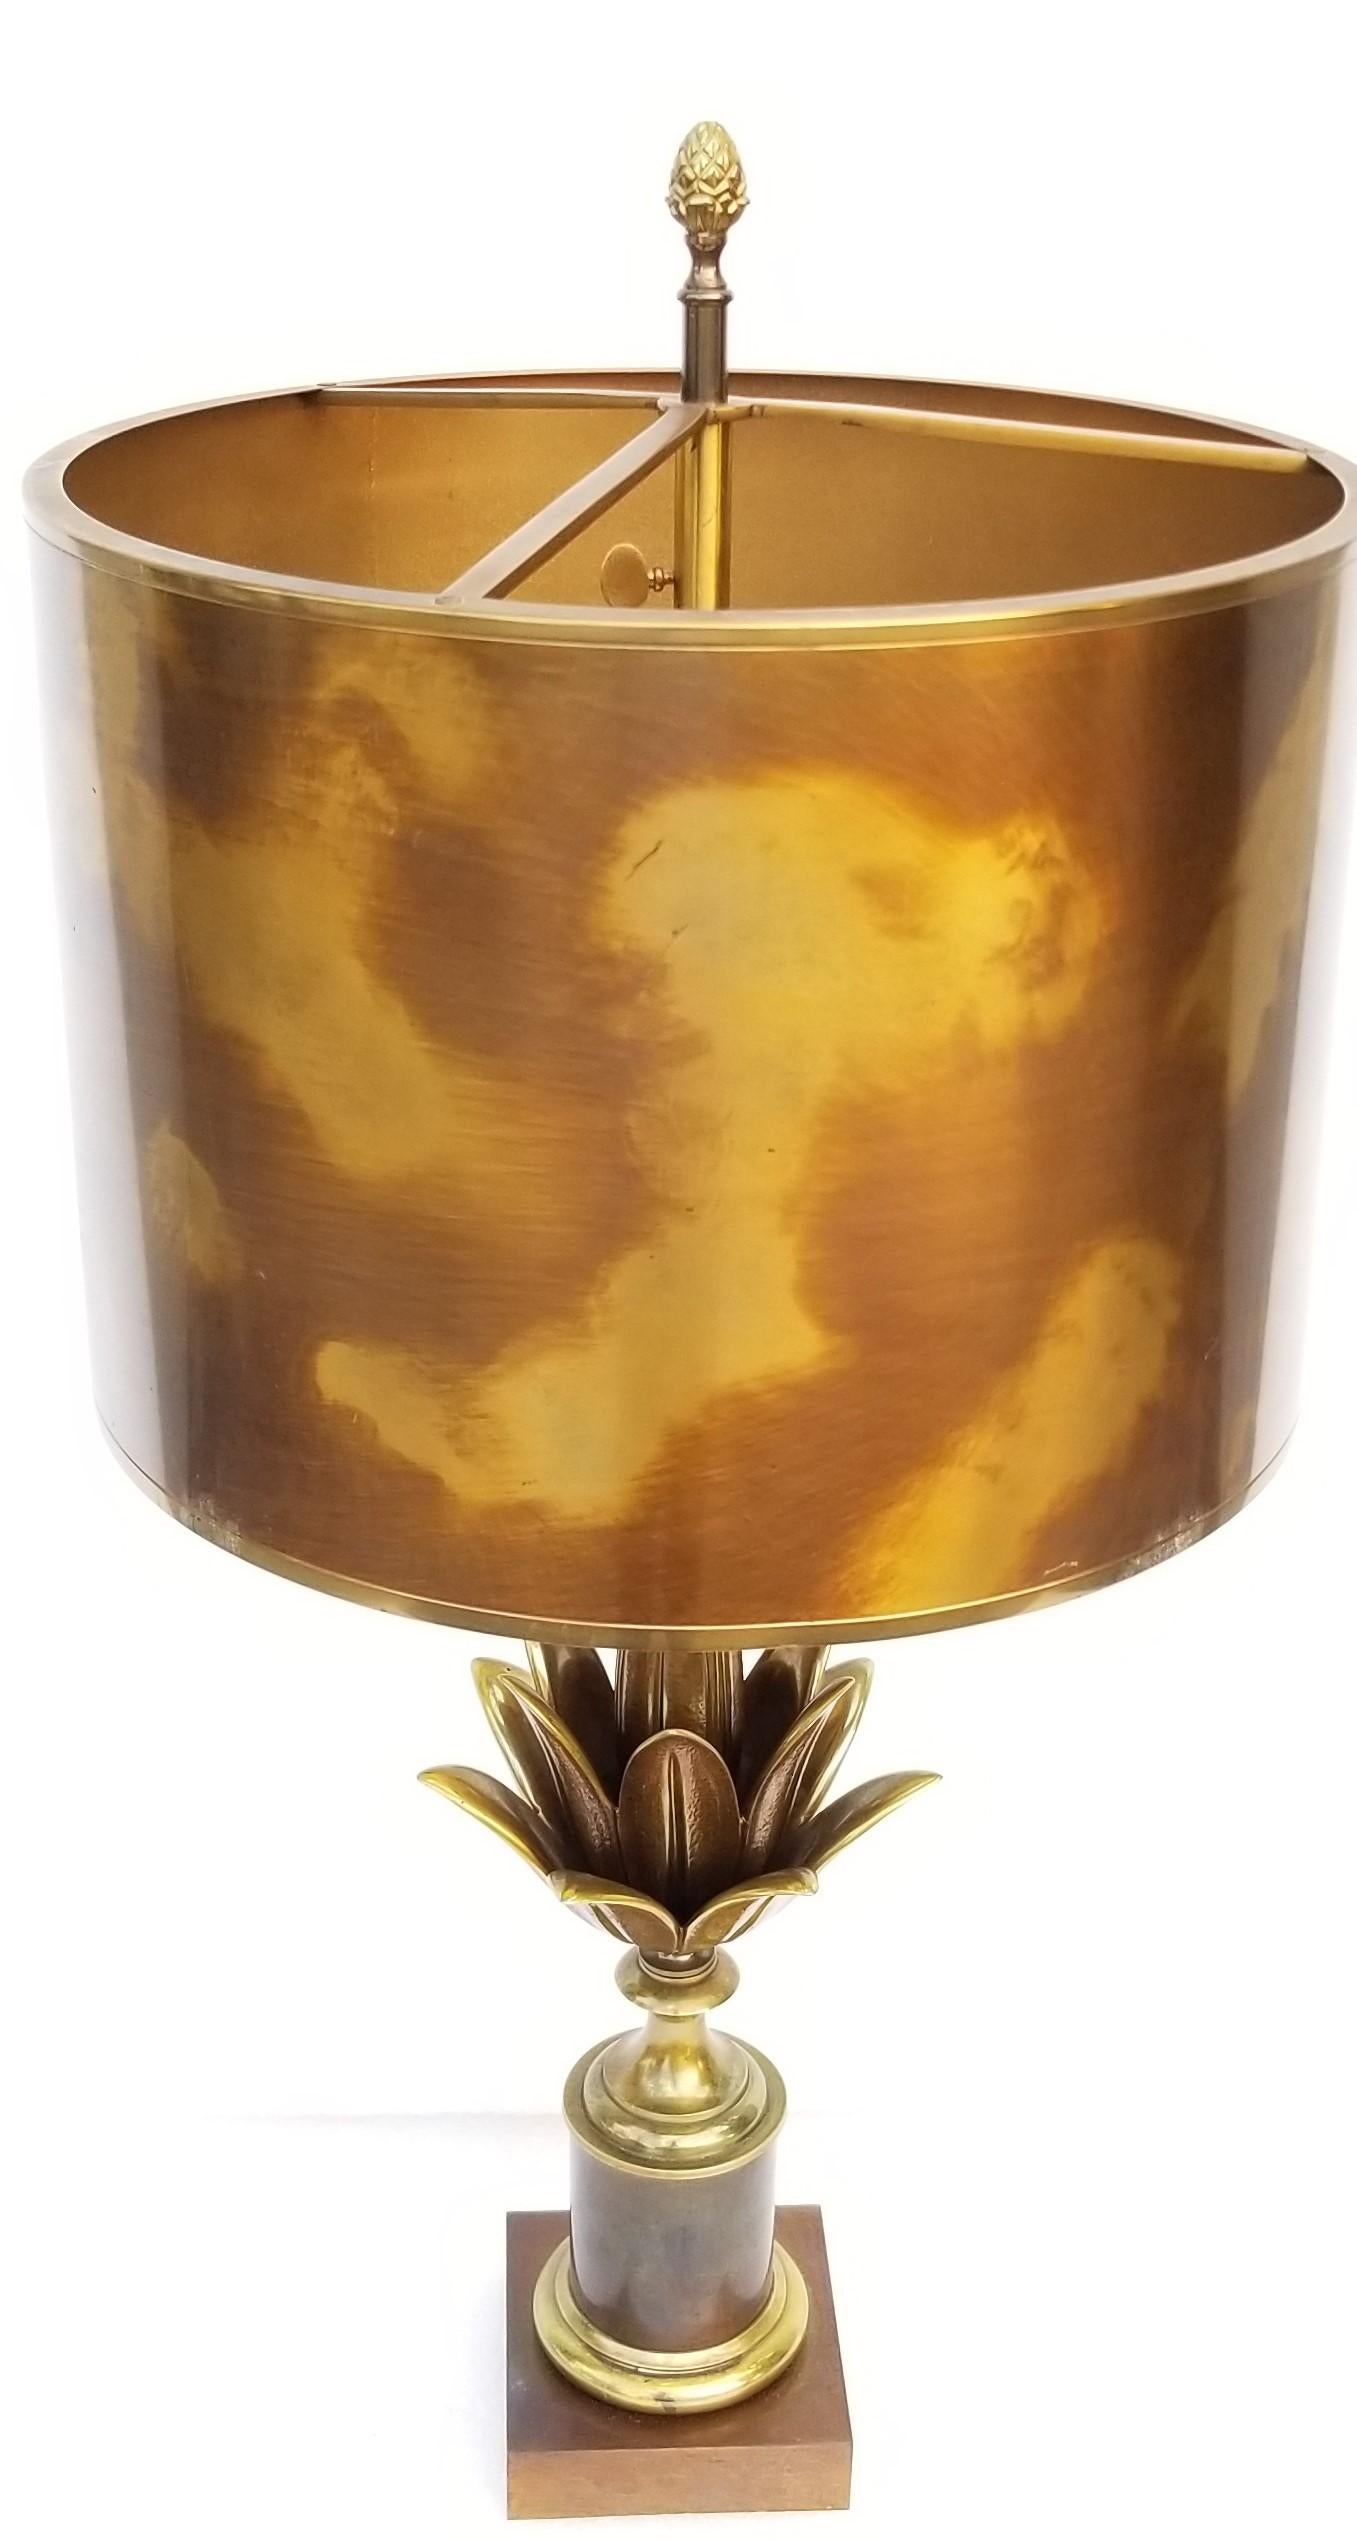 Maison Charles bronze lotus table lamp, two patina bronze, original cloudy finish metal shade.
3 lights, 80 watts max bulb.
  